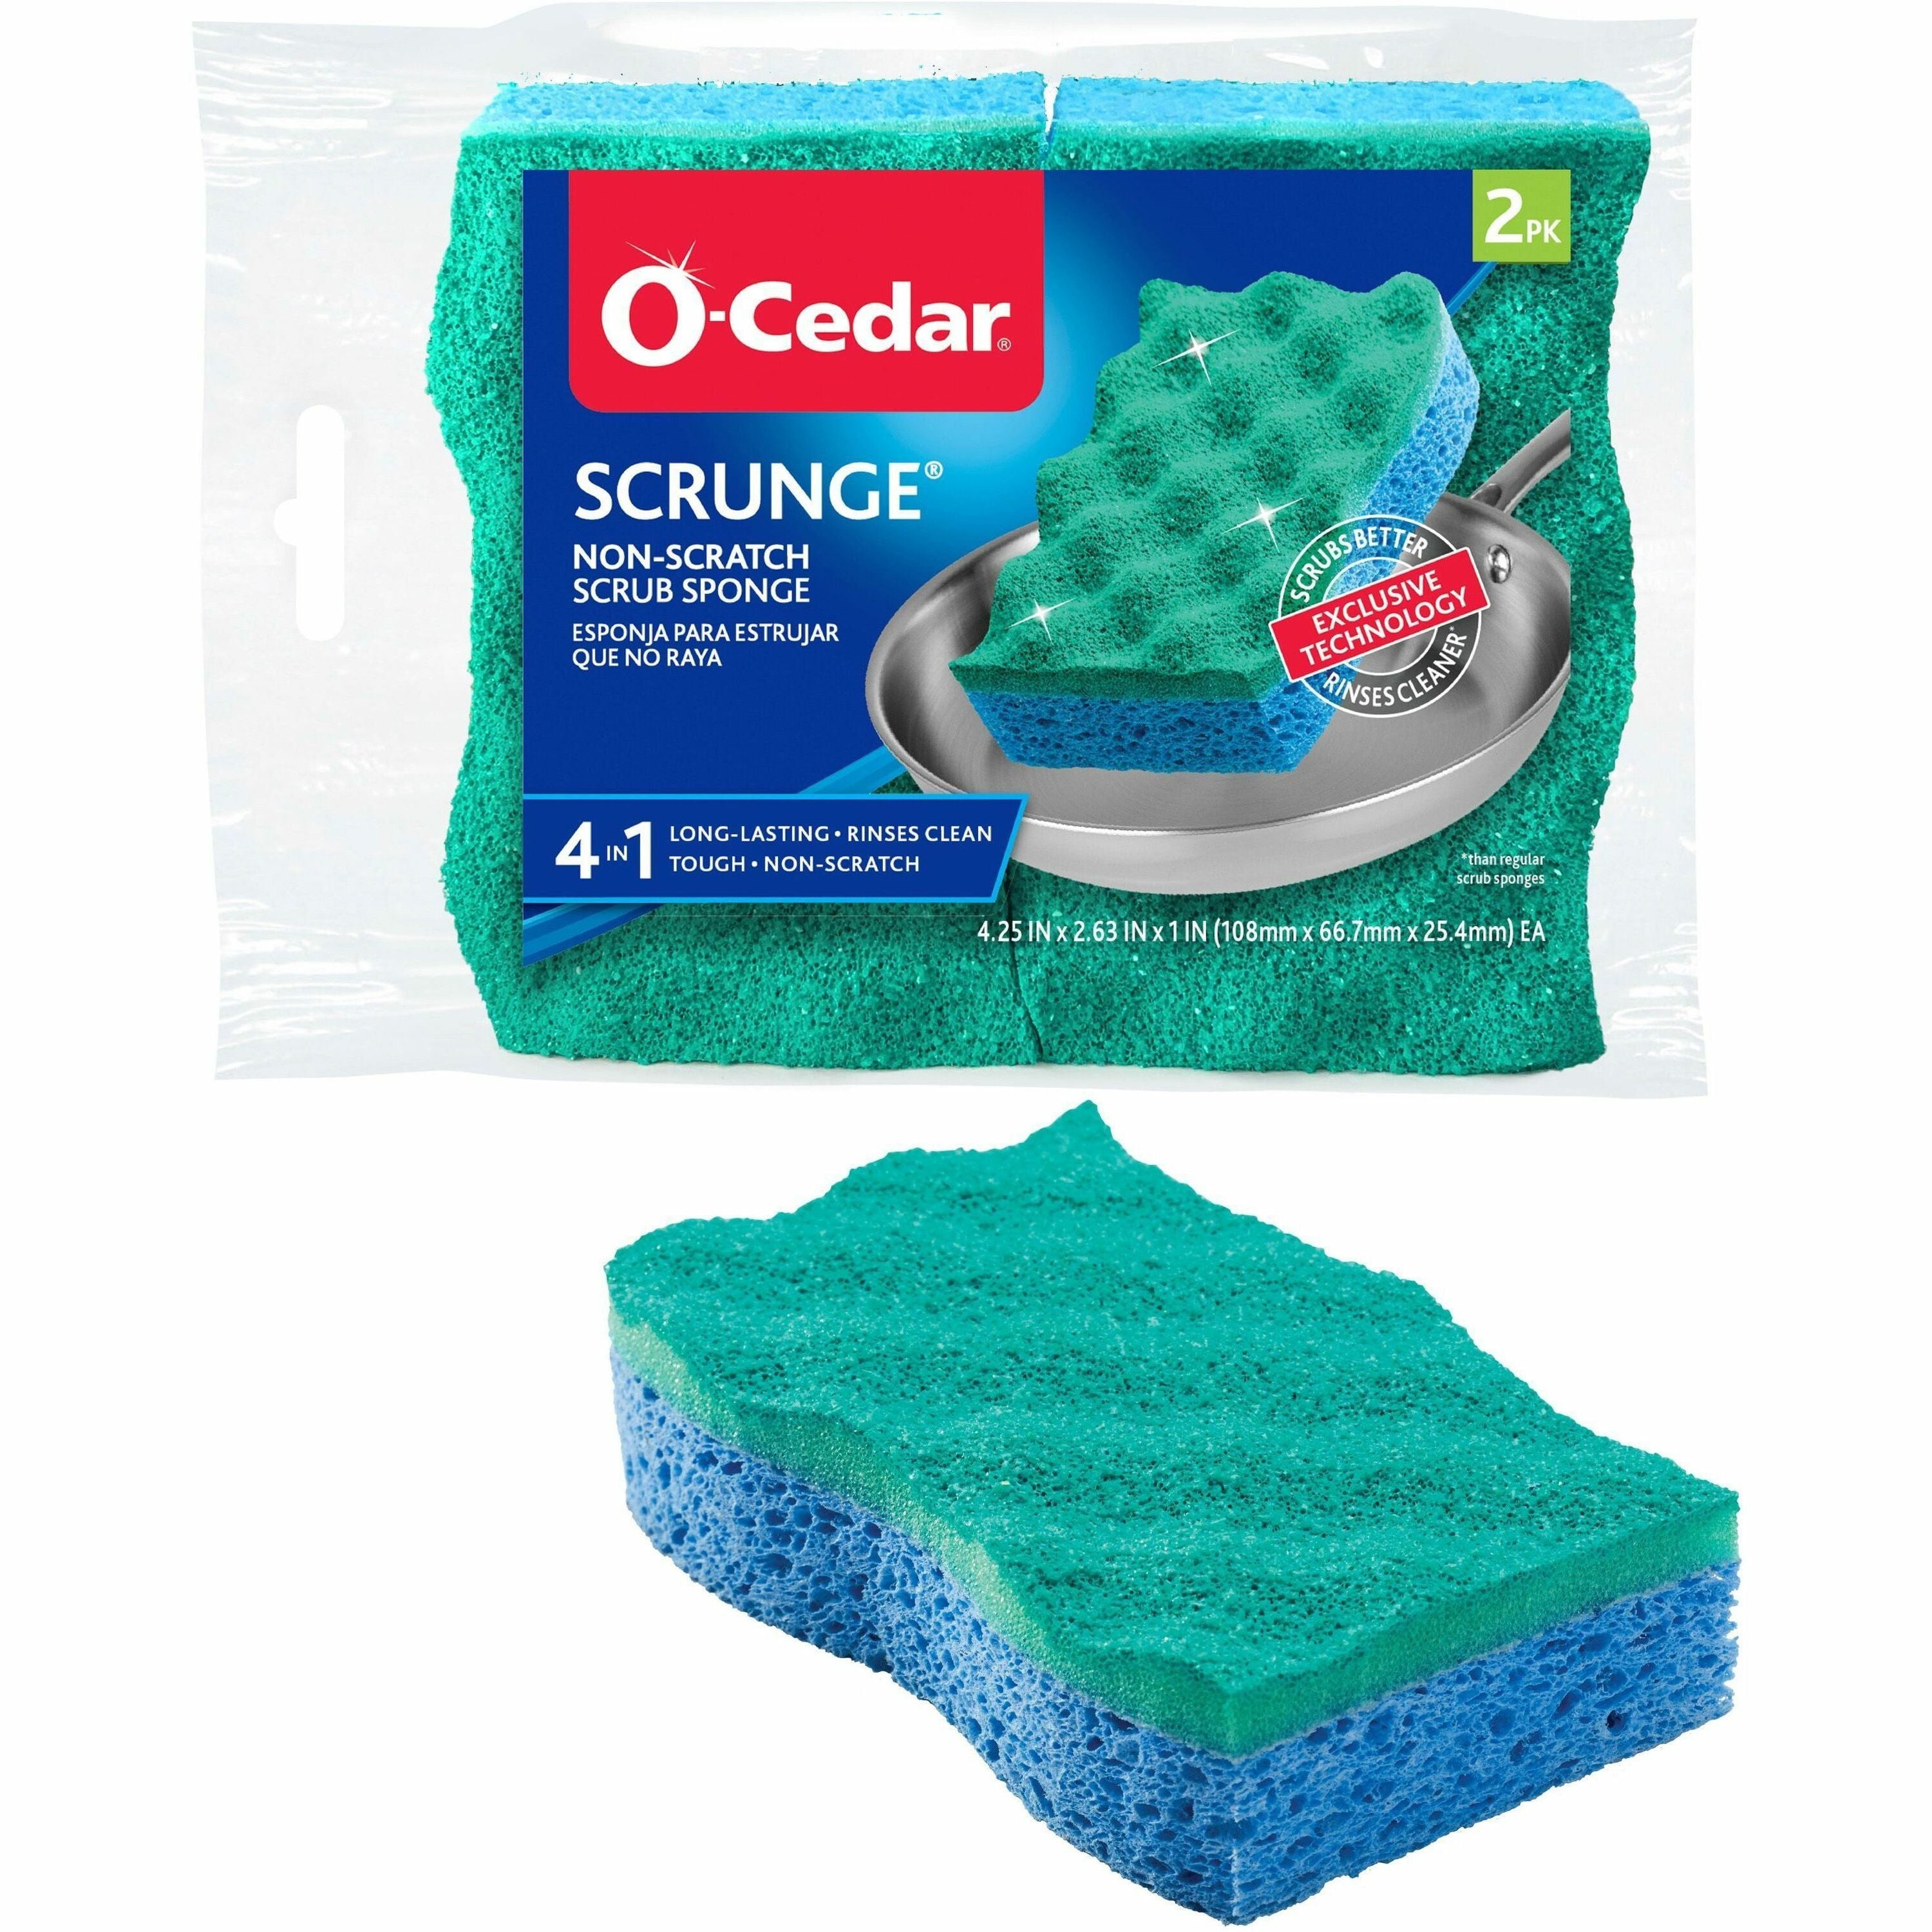 o-cedar-scrunge-non-scratch-scrub-sponge-42-width-x-26-depth-x-42-length-2-pack-cellulose-synthetic-fiber-multi-blue-green_fhp169431 - 1